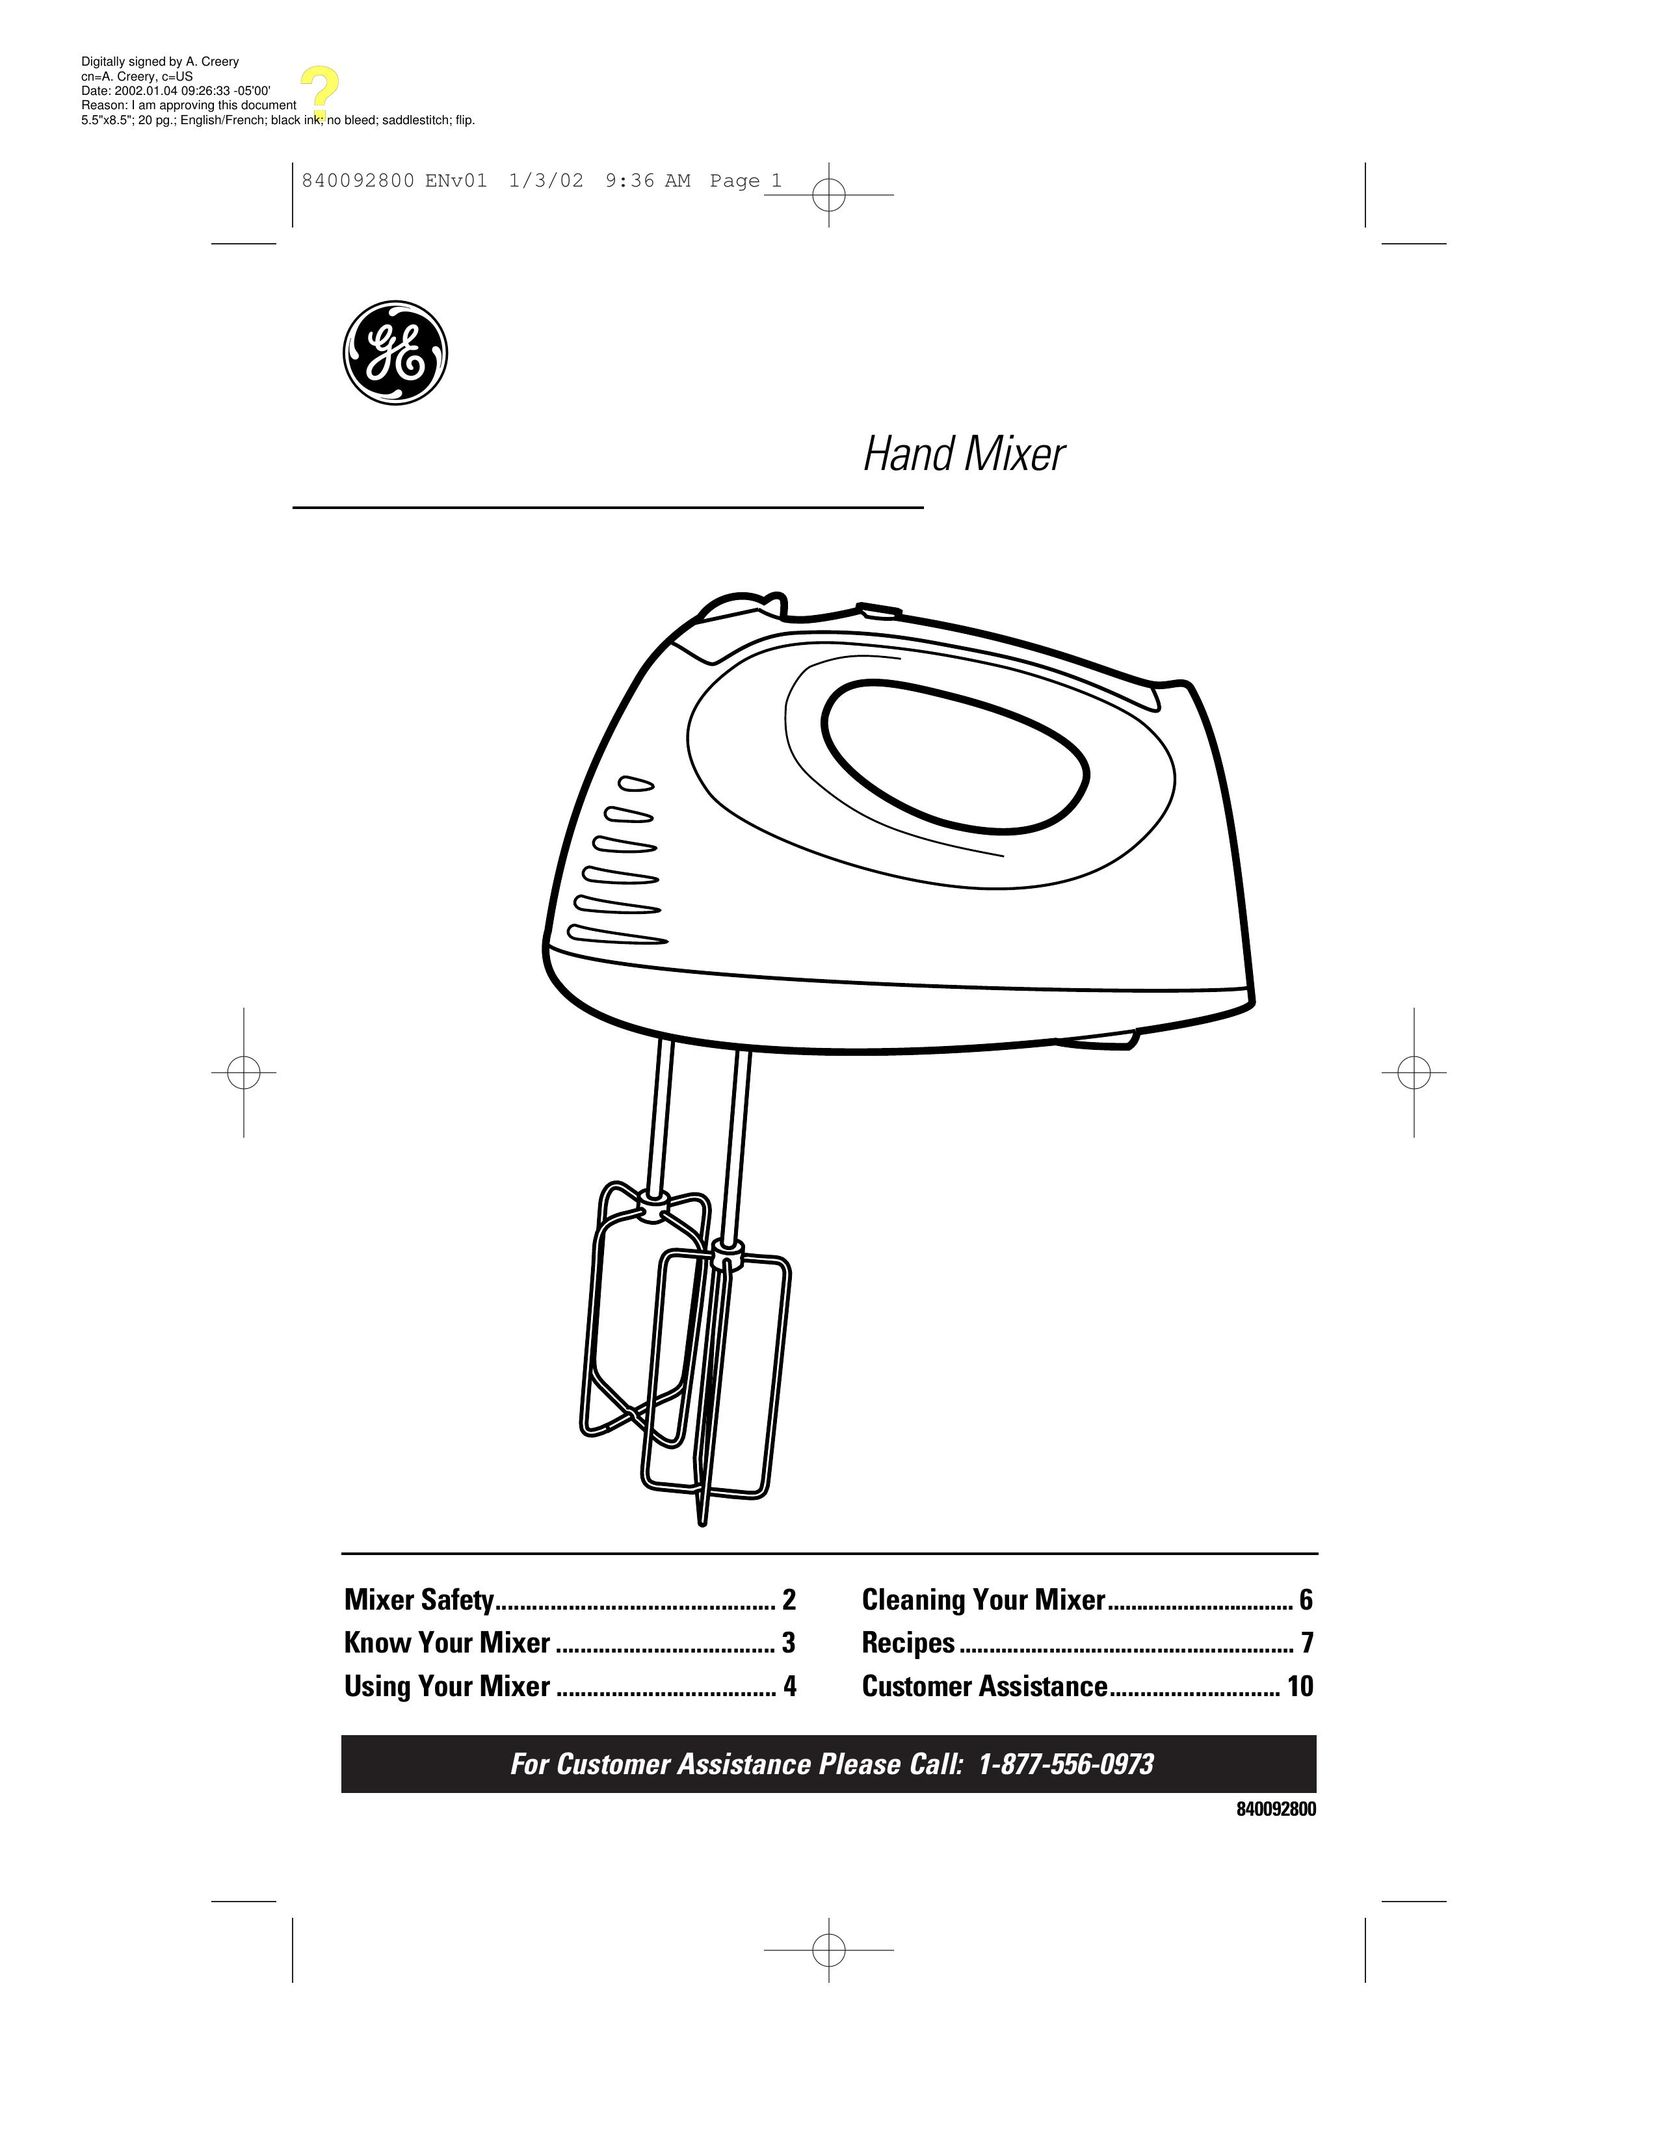 GE 106716 Mixer User Manual